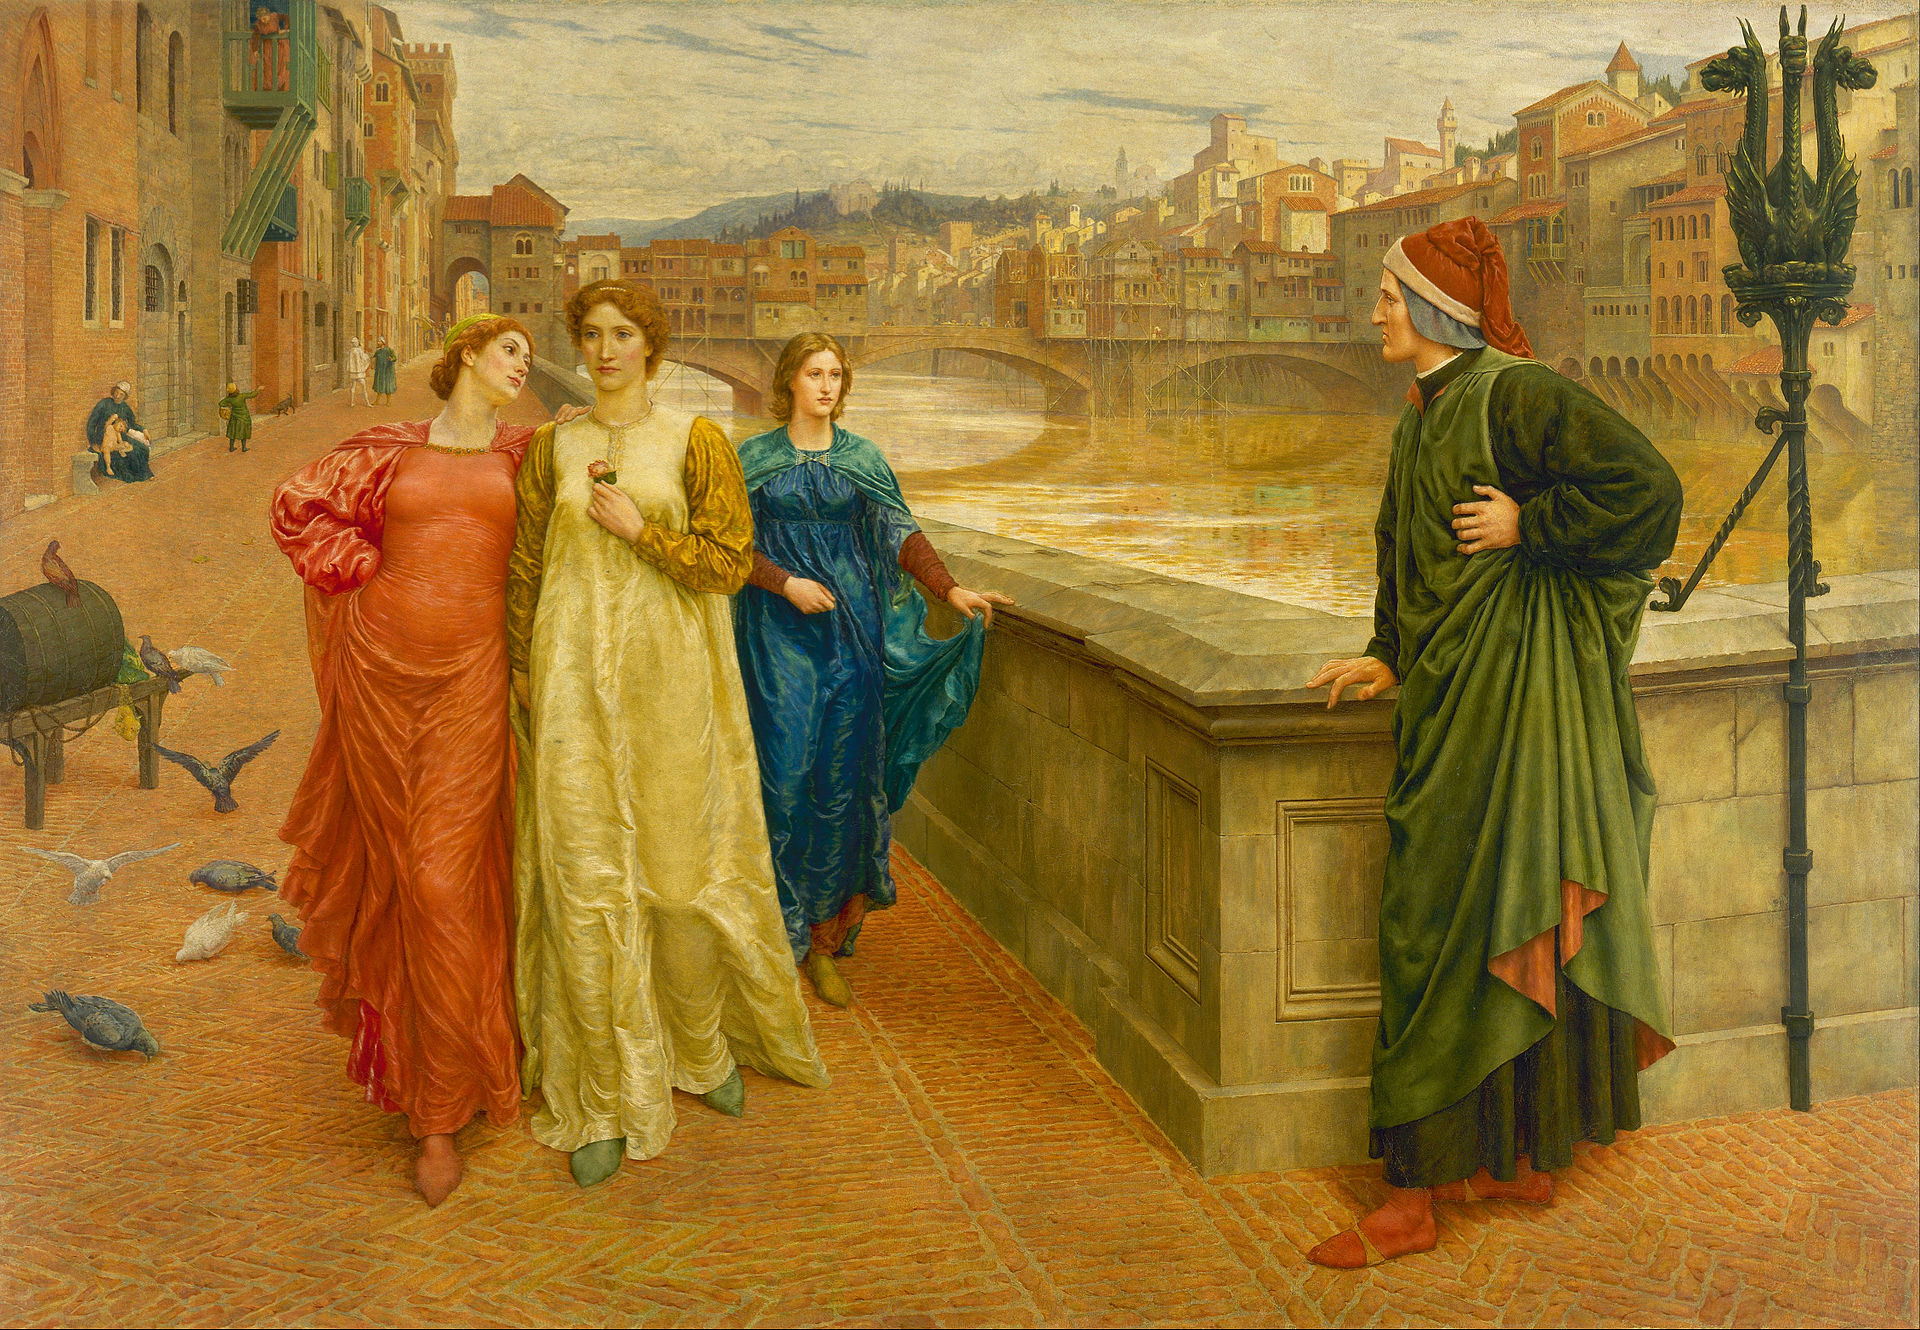 Данте и Беатриче by Henry Holiday - 1882/1884. - 142.2 x 203.2 cm 